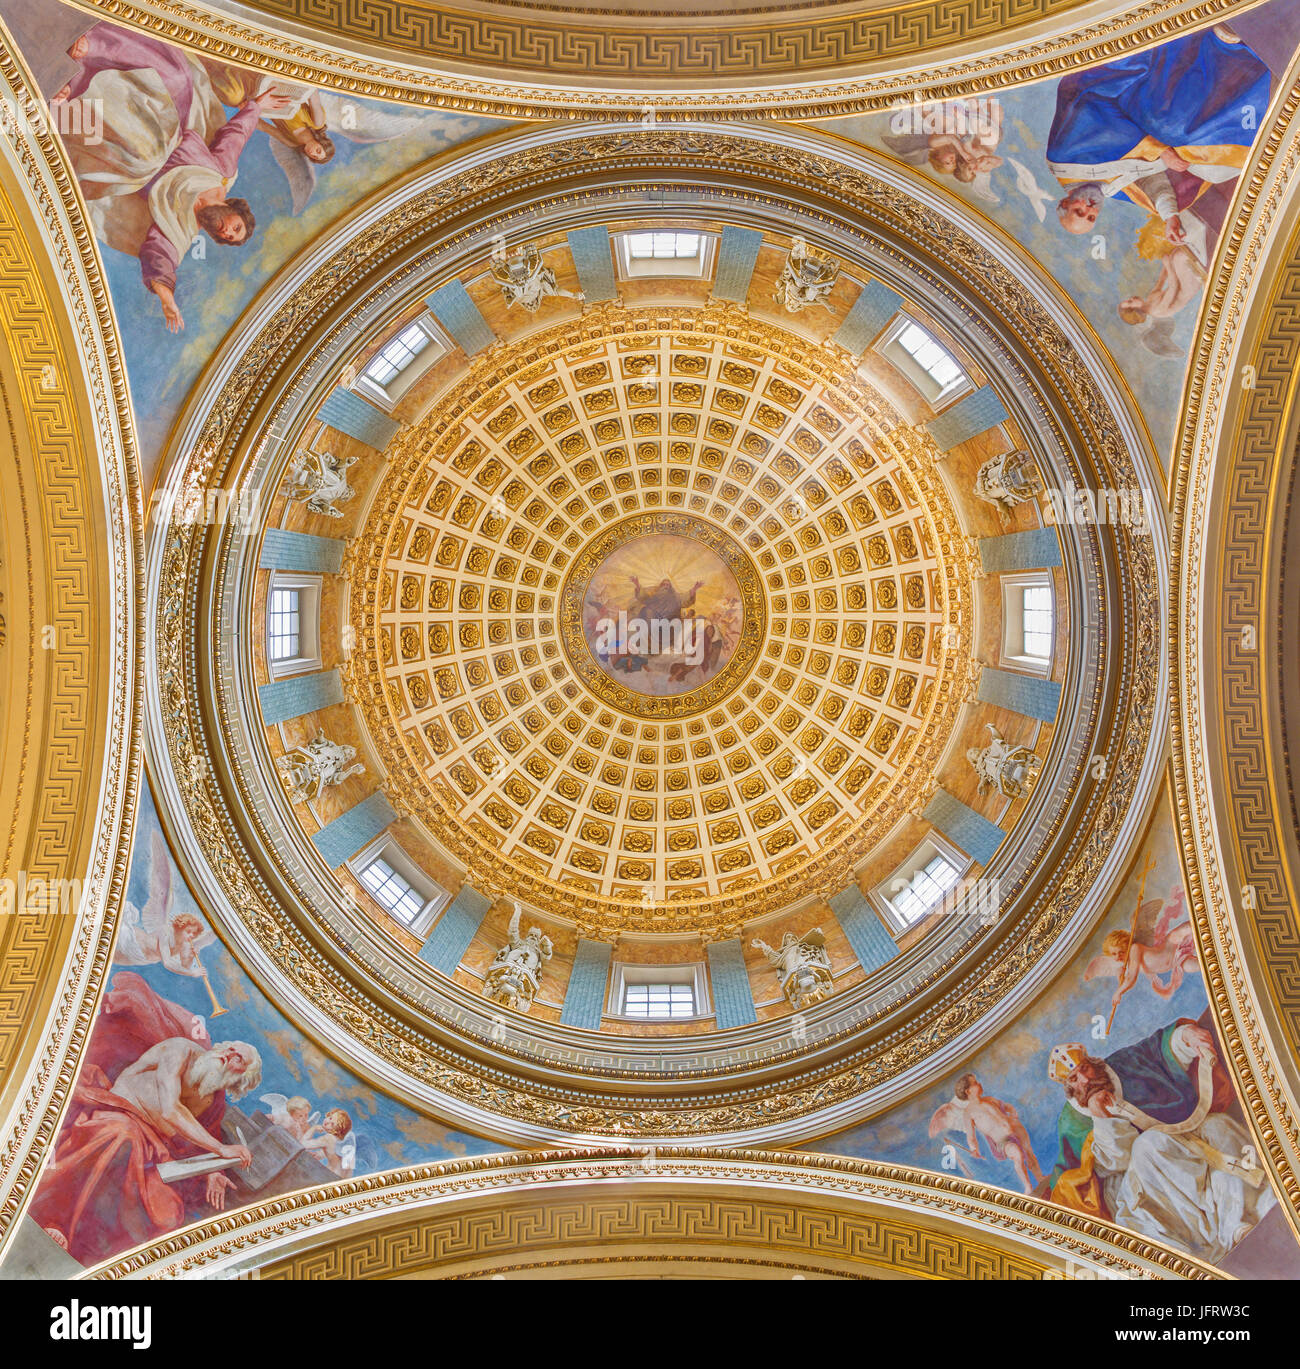 Turin - The fresco of four doctors of west catholic church (Athanas, Augustine, Jerome, Leo) cupola of church Chiesa di San Massimo. Stock Photo